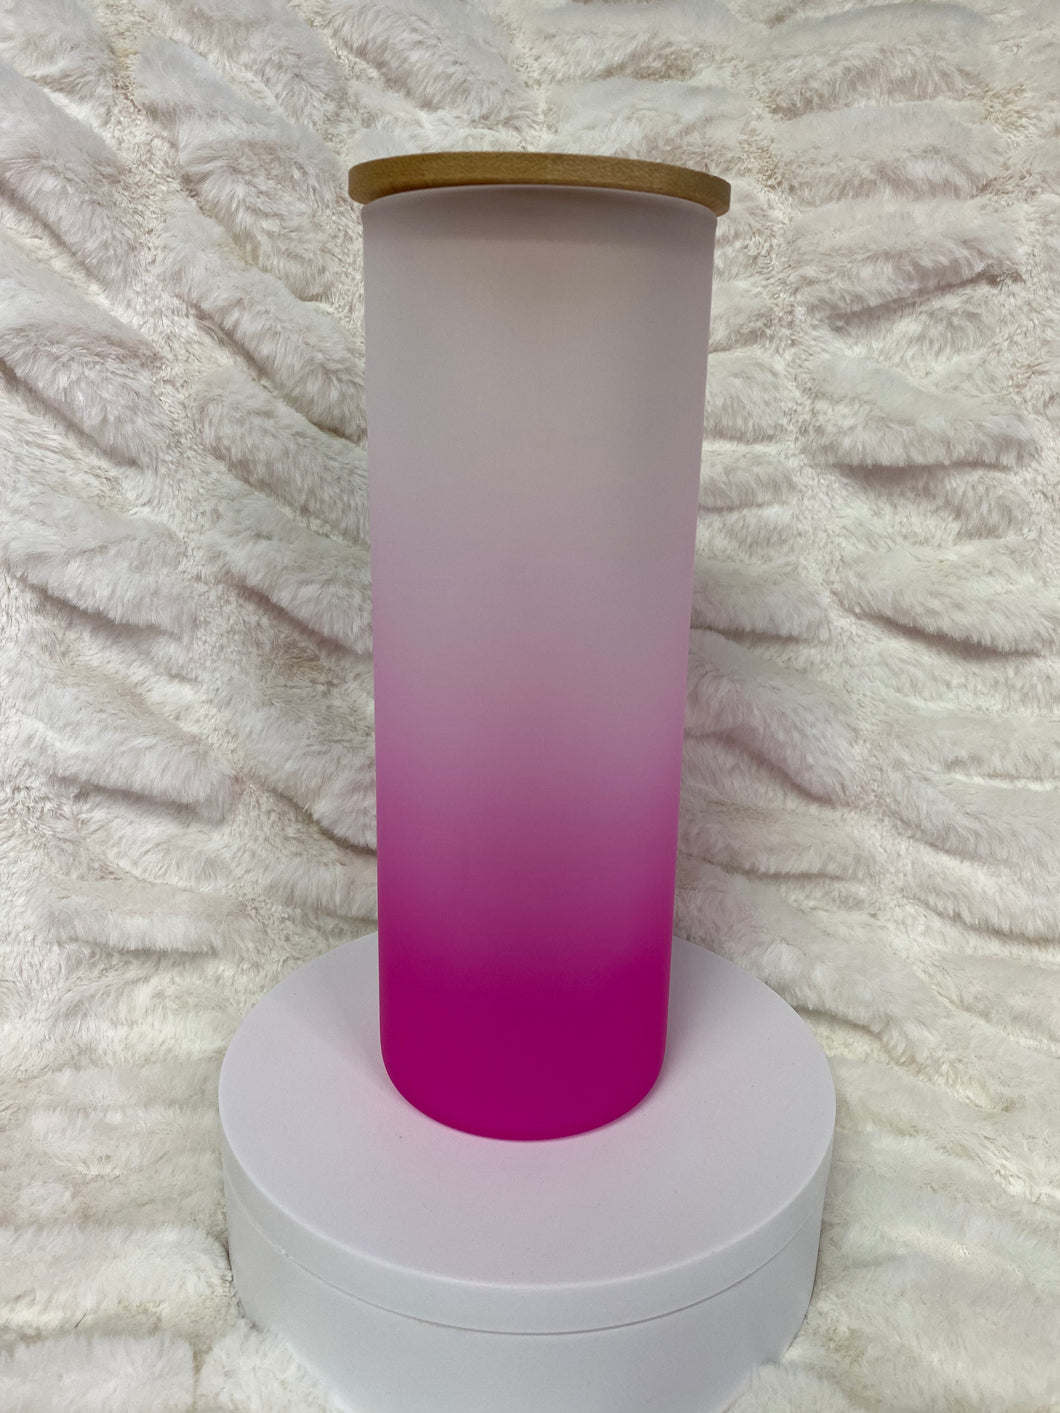 Liquid therapy glass tumbler